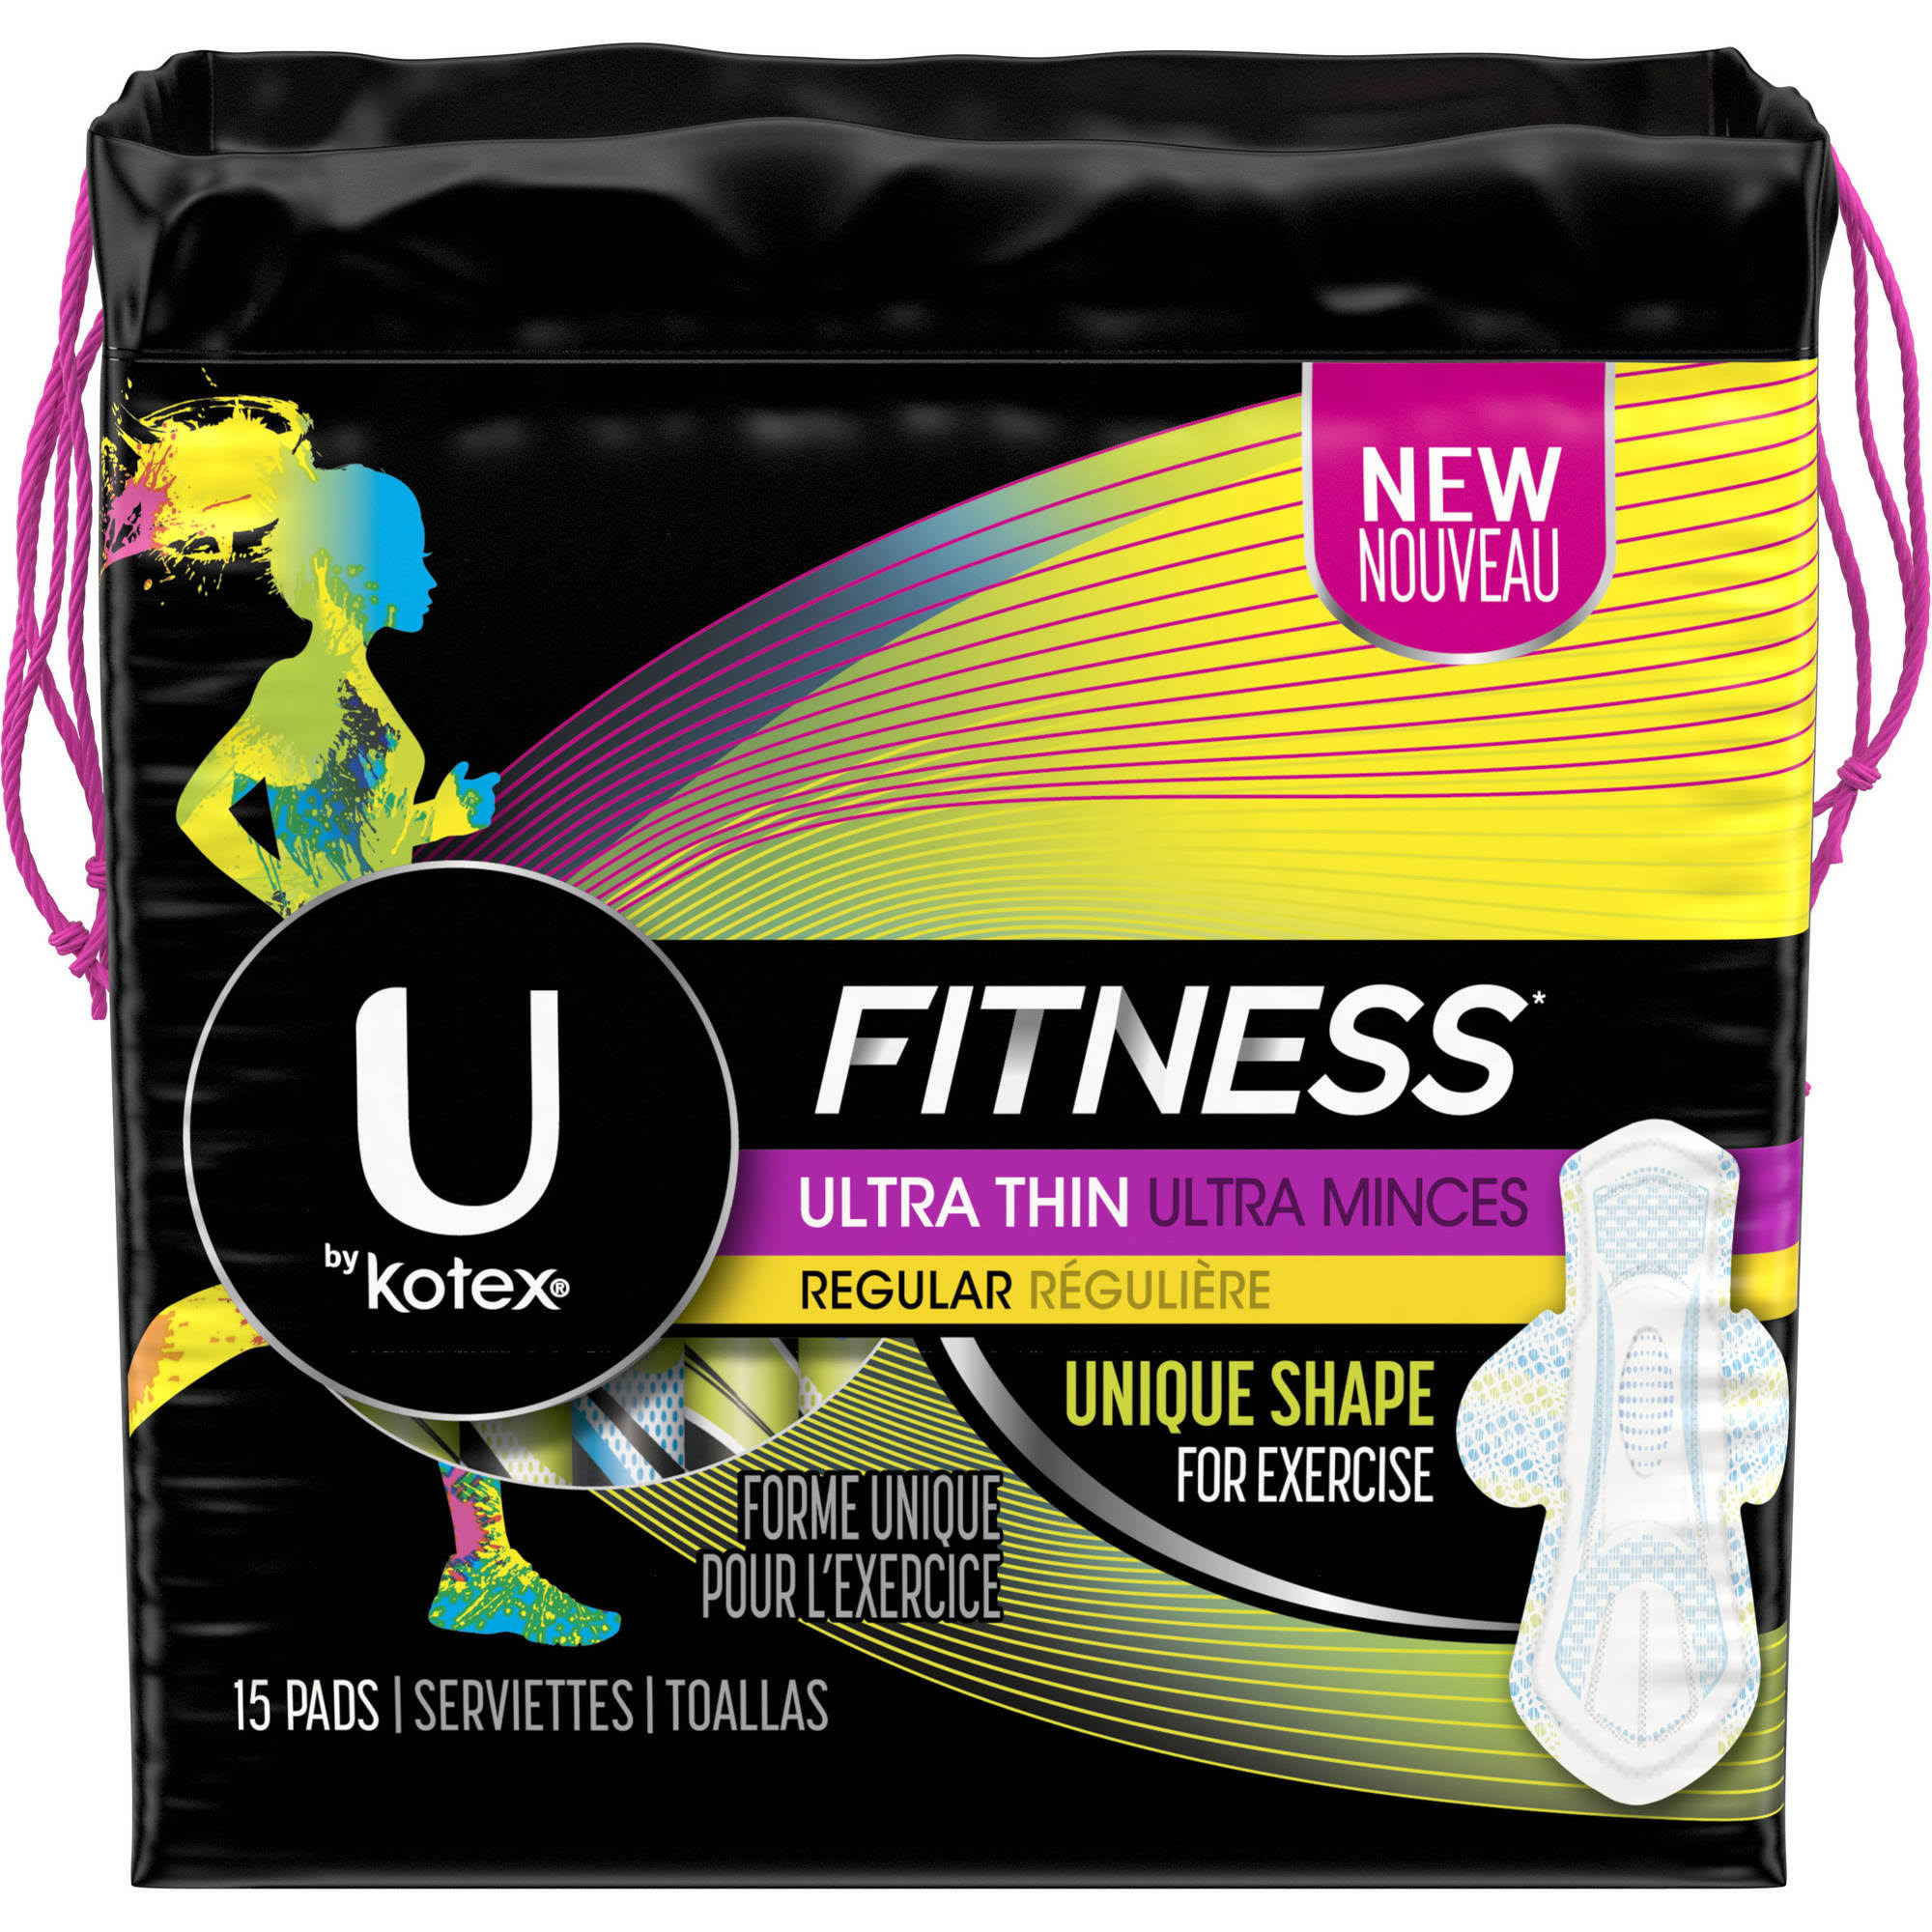 U by Kotex Fitness Ultra Thin Regular Pads - 15 Pack